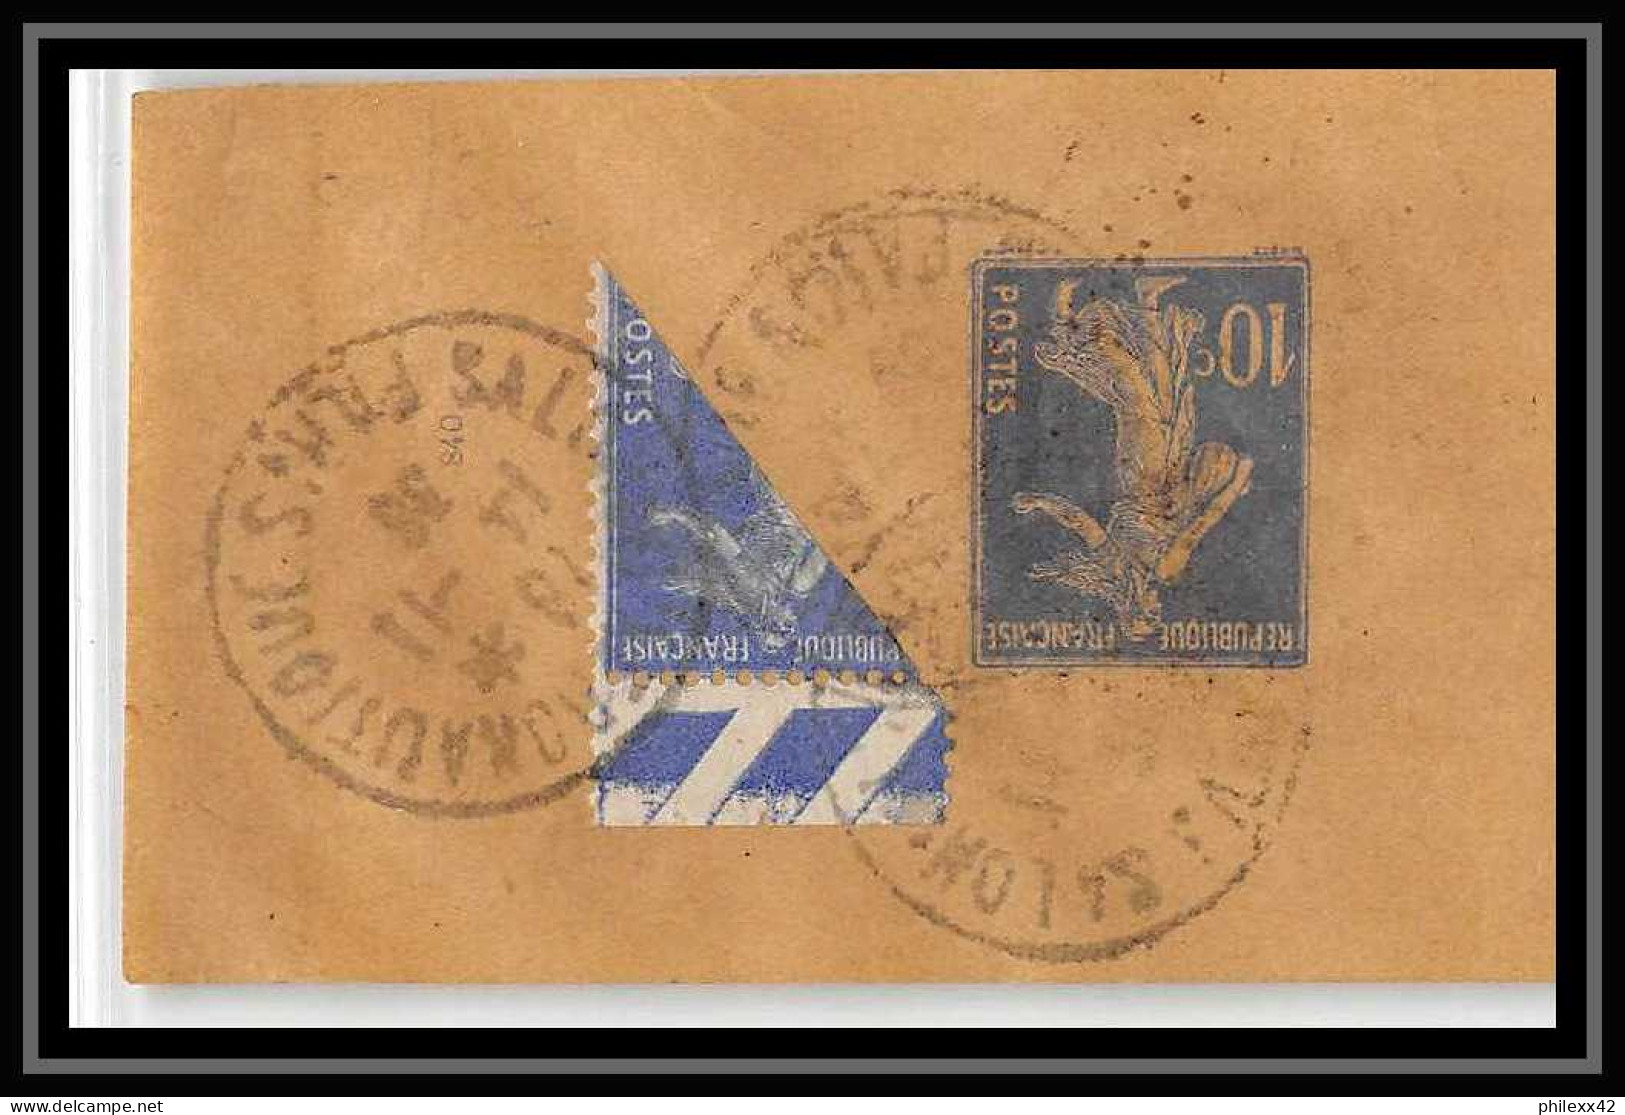 4743 Semeuse 10c + Complement Moitié De Timbre 1/2 1933 Fragment Bande Journal France Entier Postal Stationery - Newspaper Bands